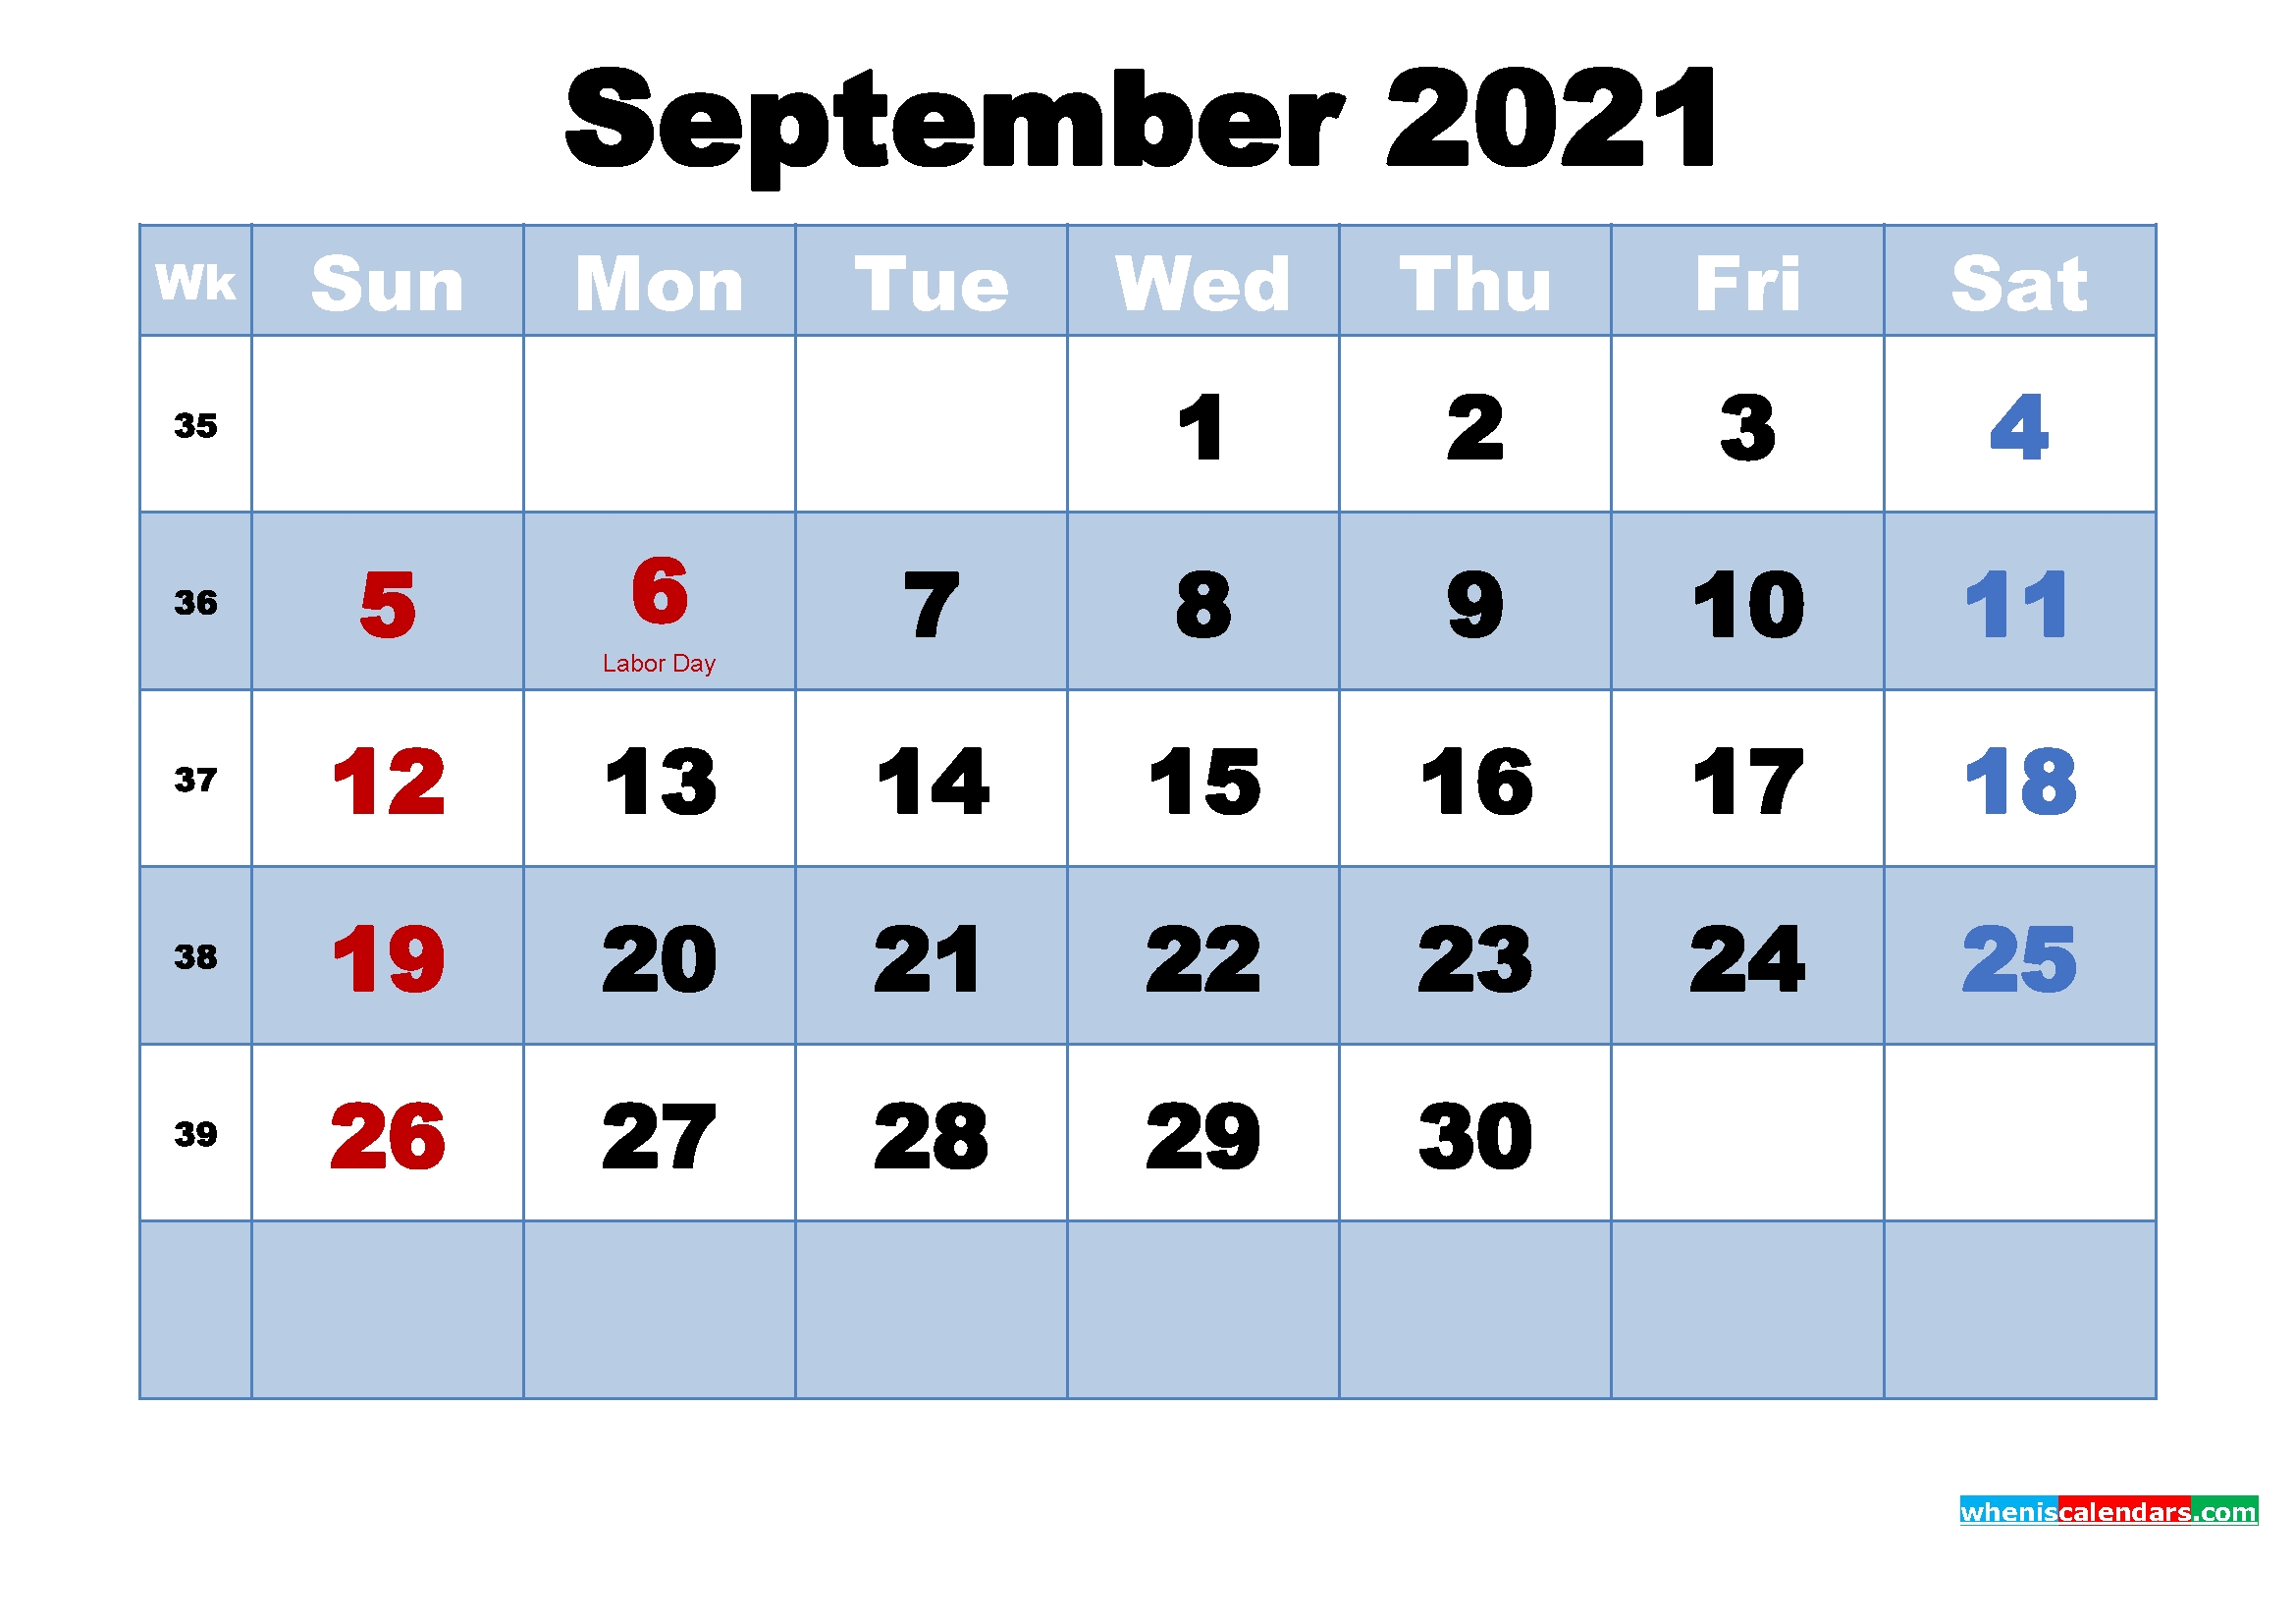 Get September 2021 Printable Desk Calendar